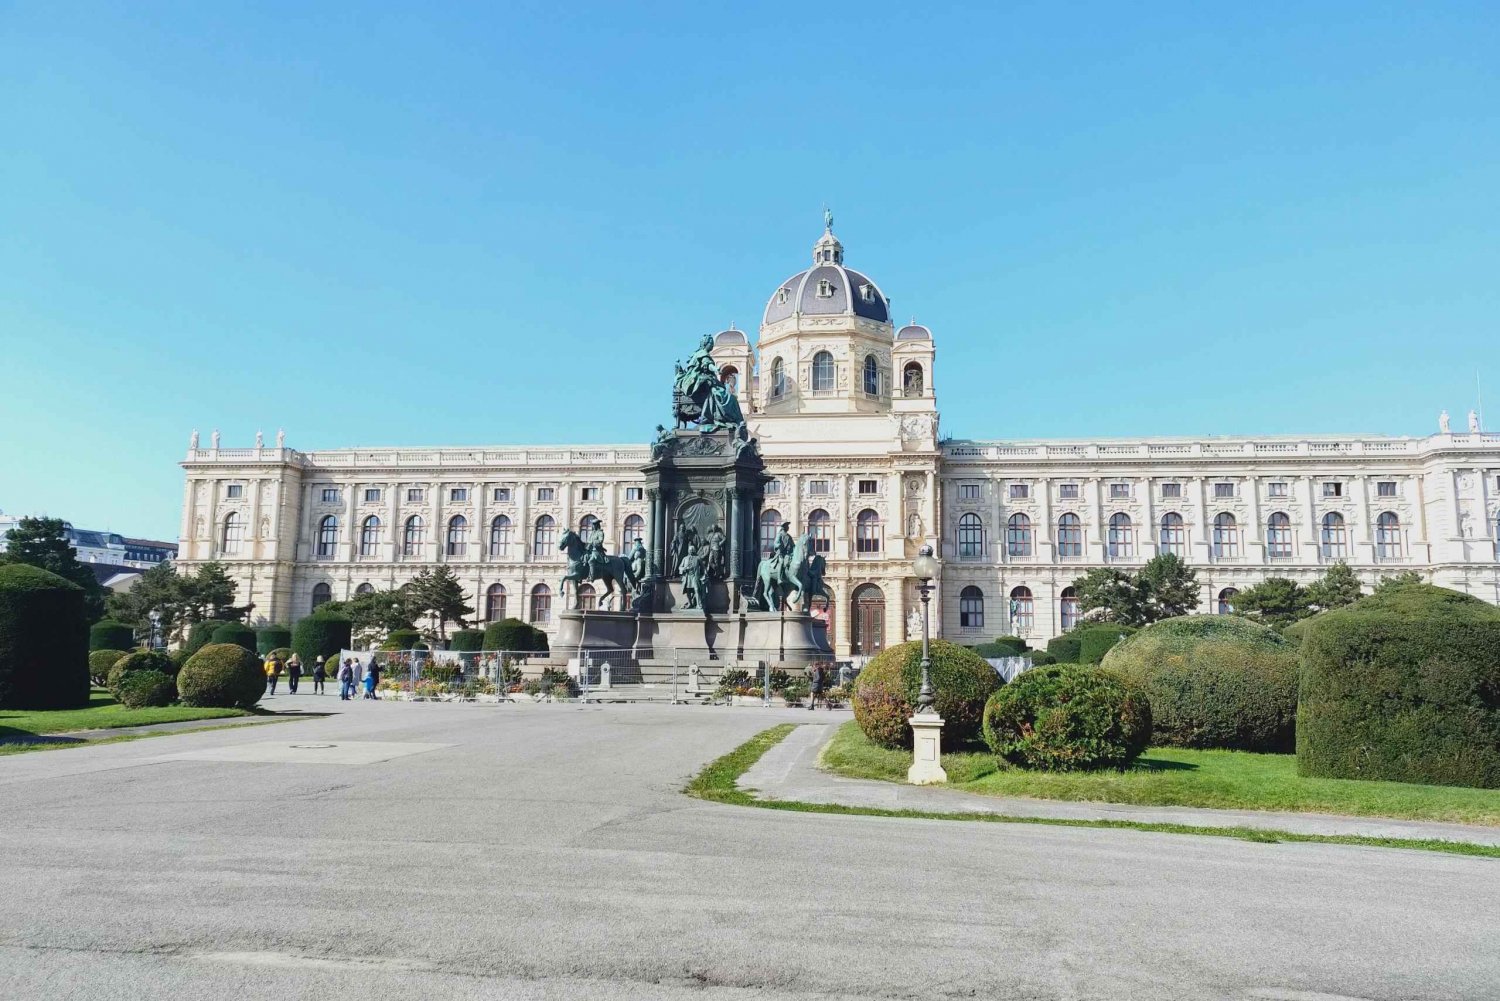 Historisk stadsrundtur i Wien + vinprovning